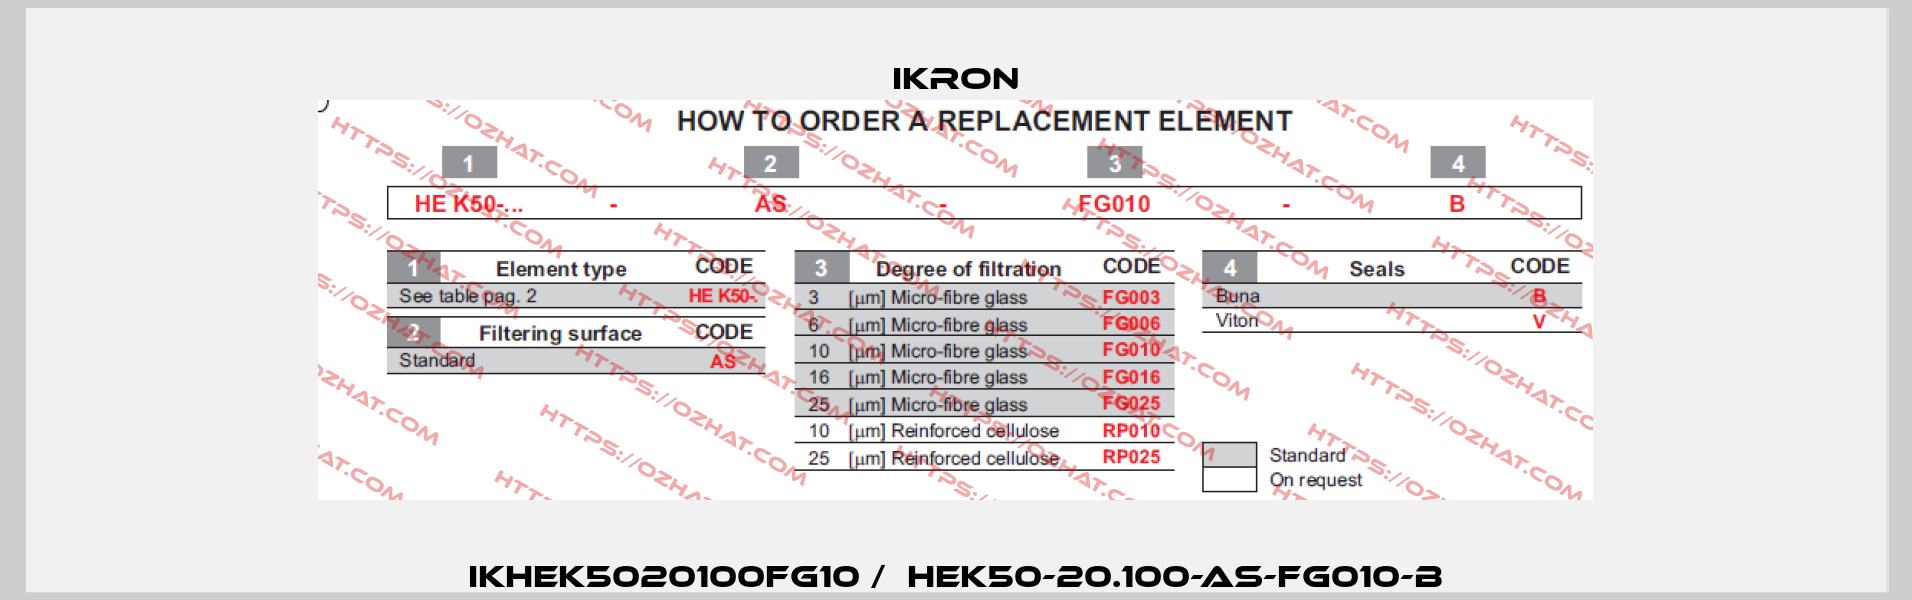 IKHEK5020100FG10 /  HEK50-20.100-AS-FG010-B Ikron